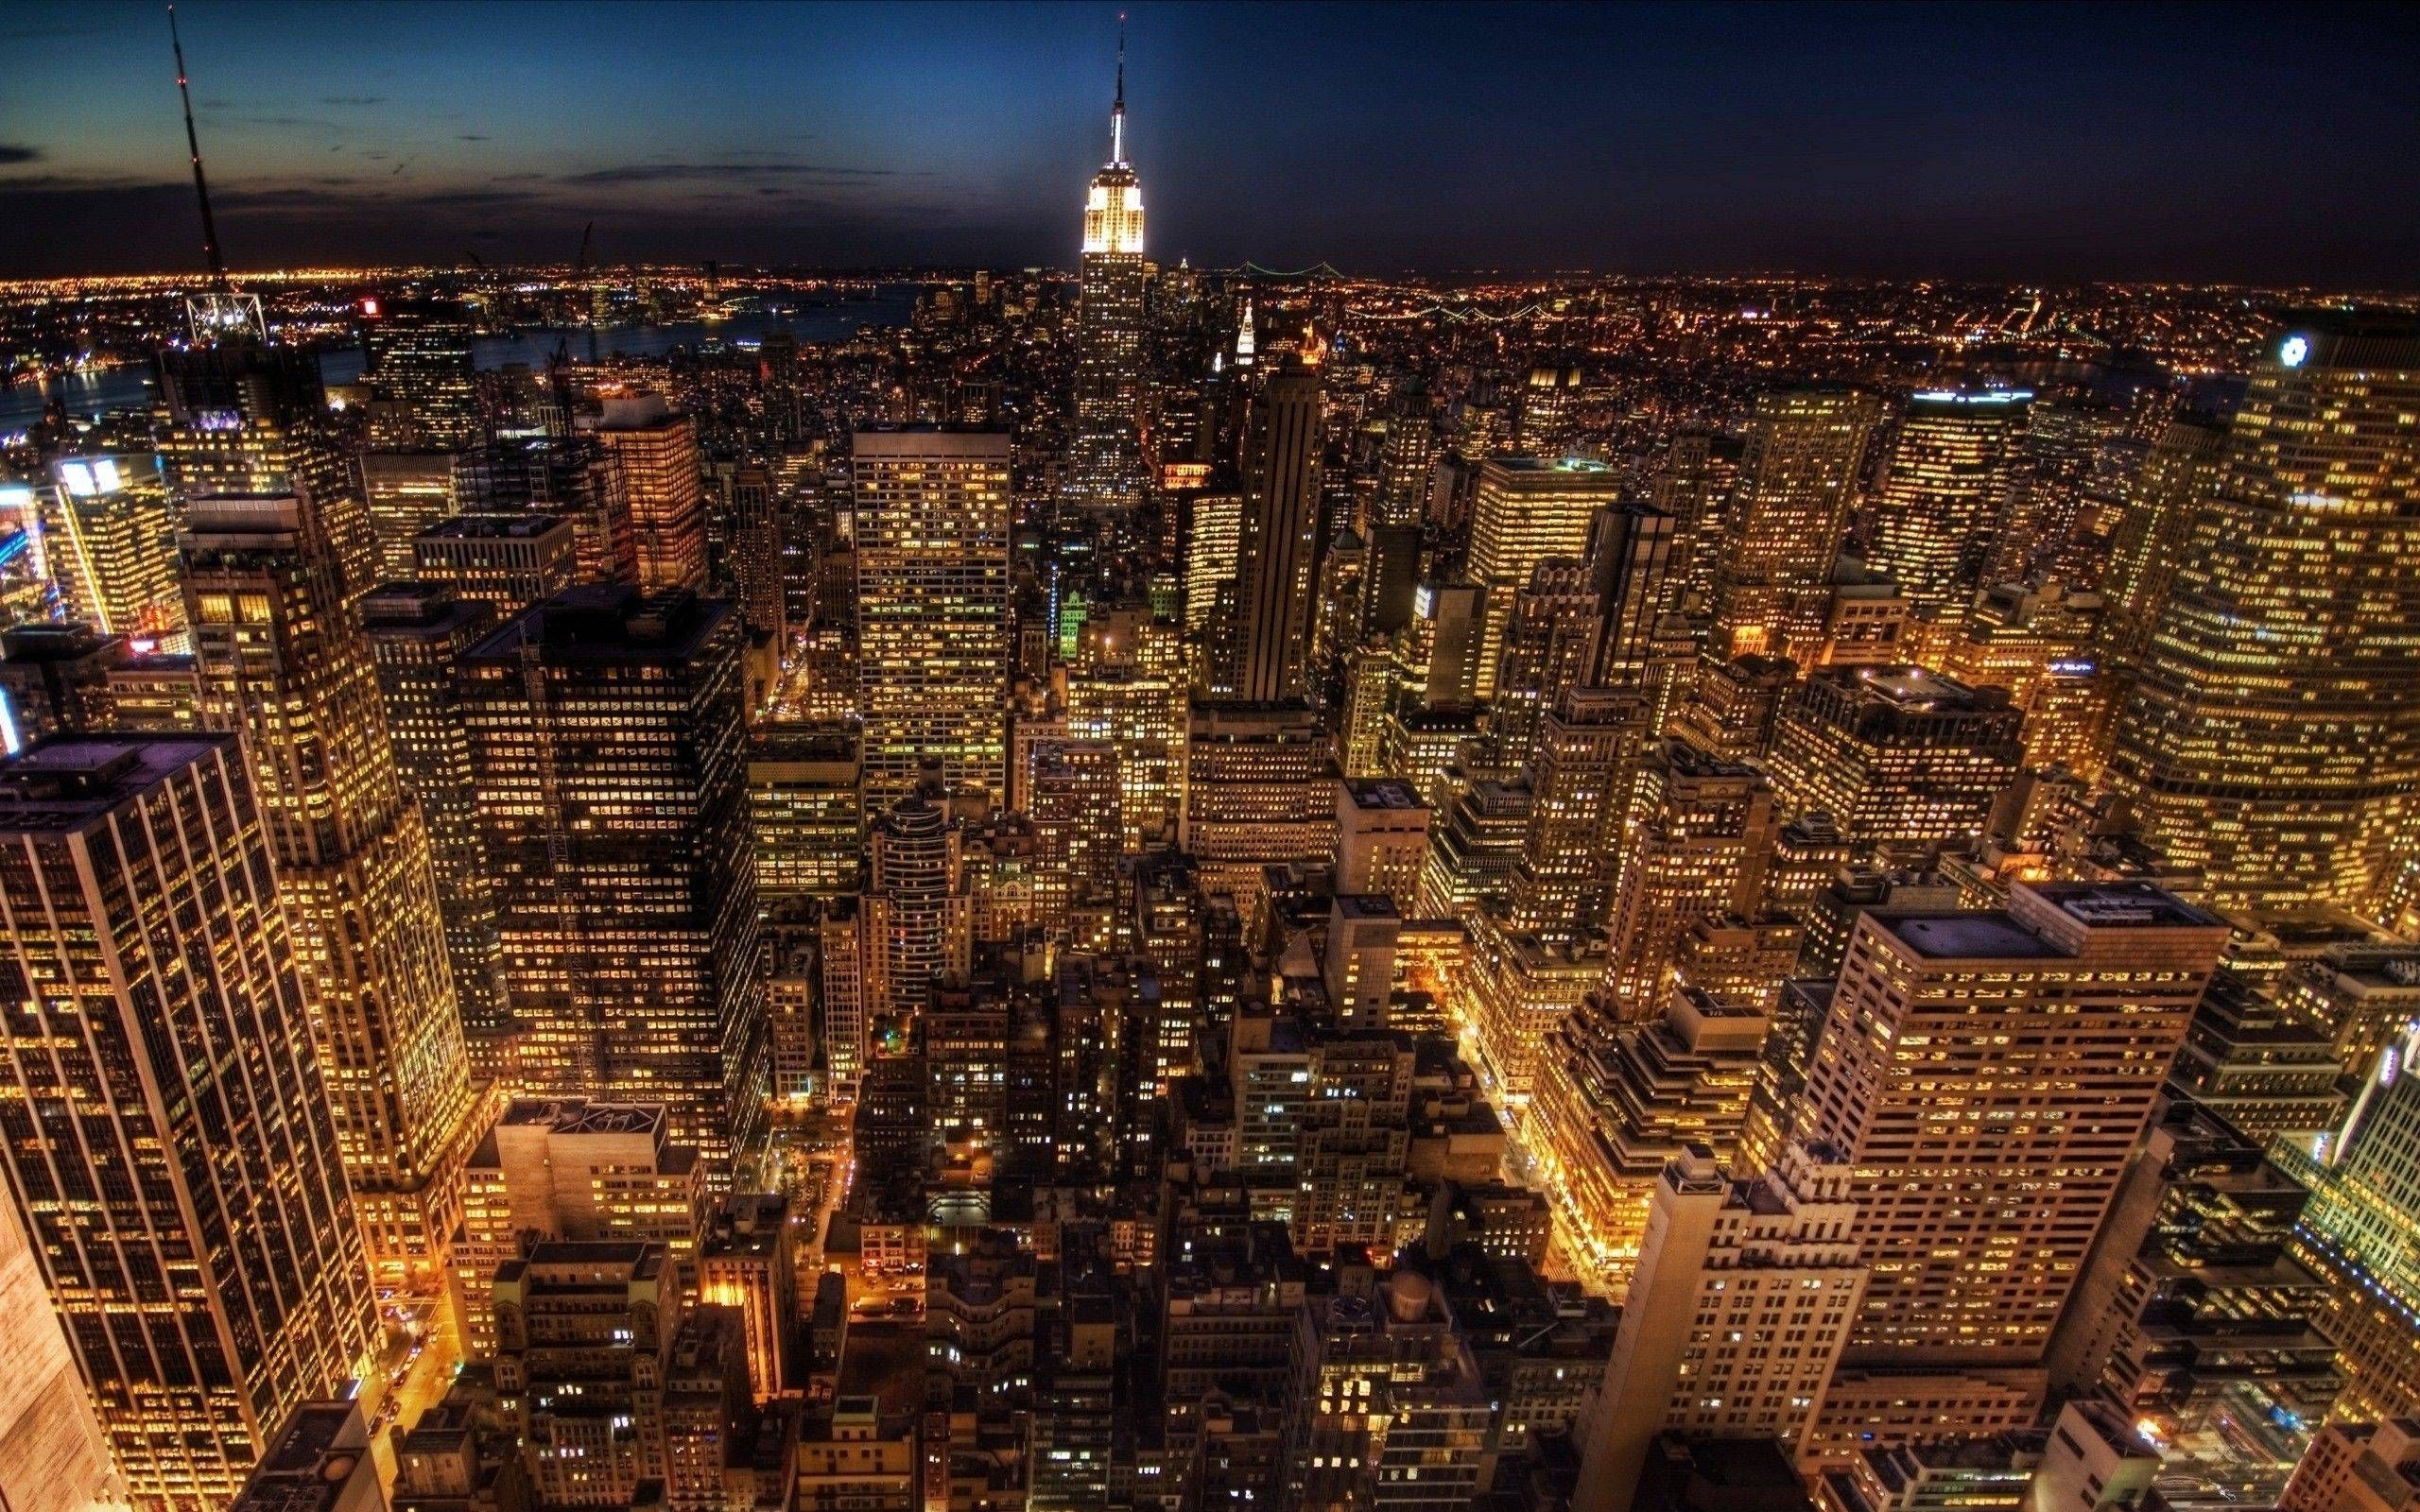 10 Best New York City Night Hd Wallpaper FULL HD 1080p For PC